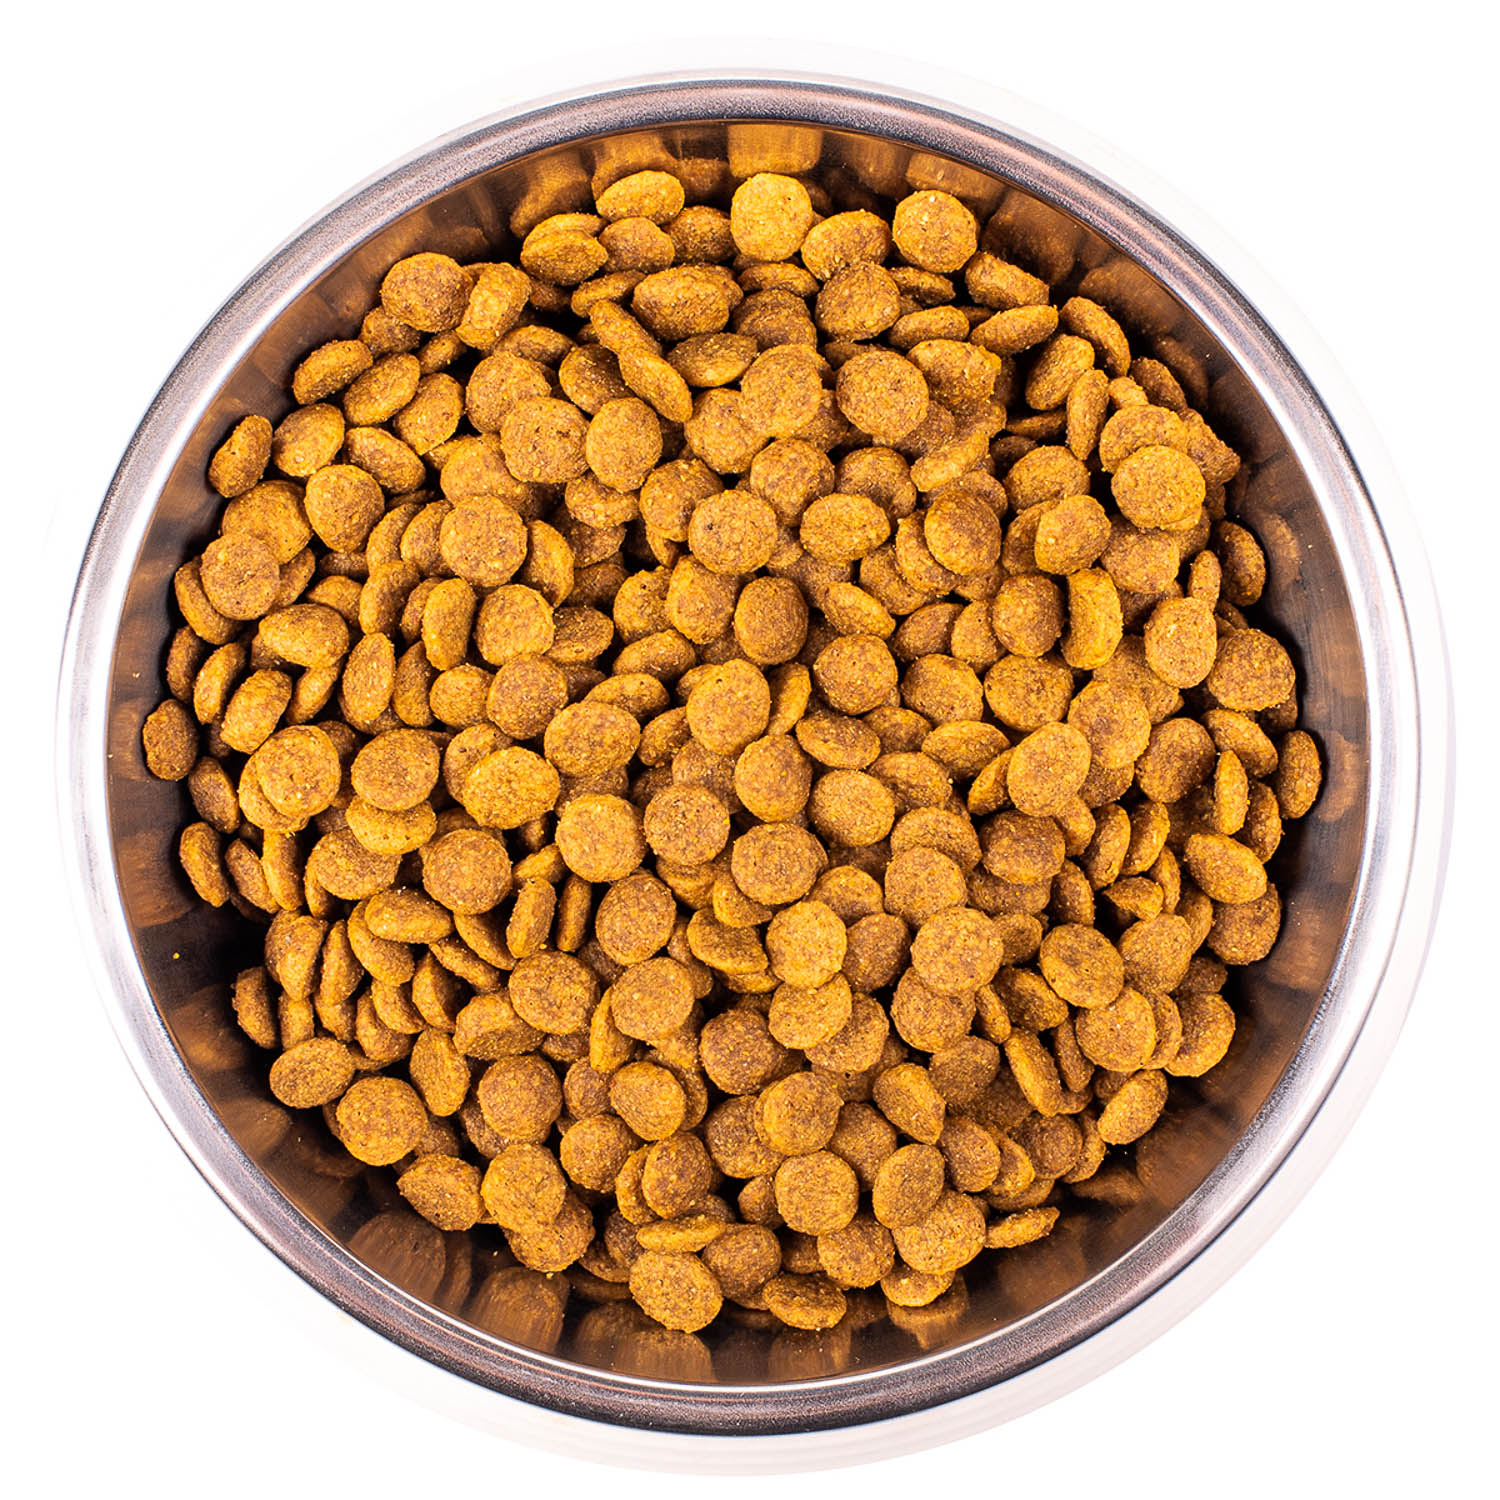 Сухой корм Monge Cat Speciality Line Monoprotein Sterilised для стерилизованных кошек, из форели 1,5 кг